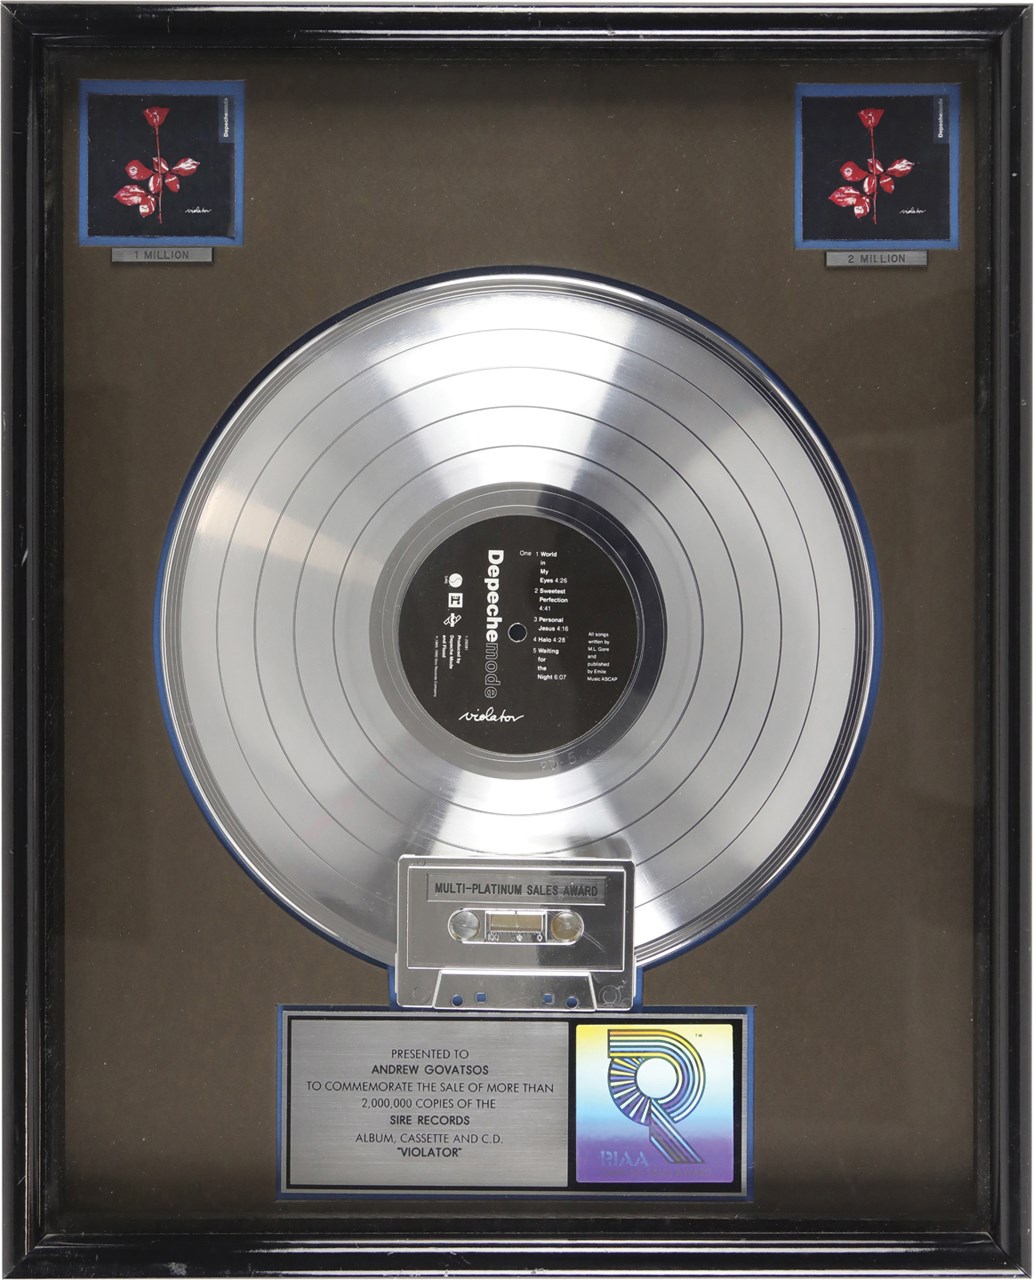 - Depeche Mode "Violator" Double Platinum Record Sales Award